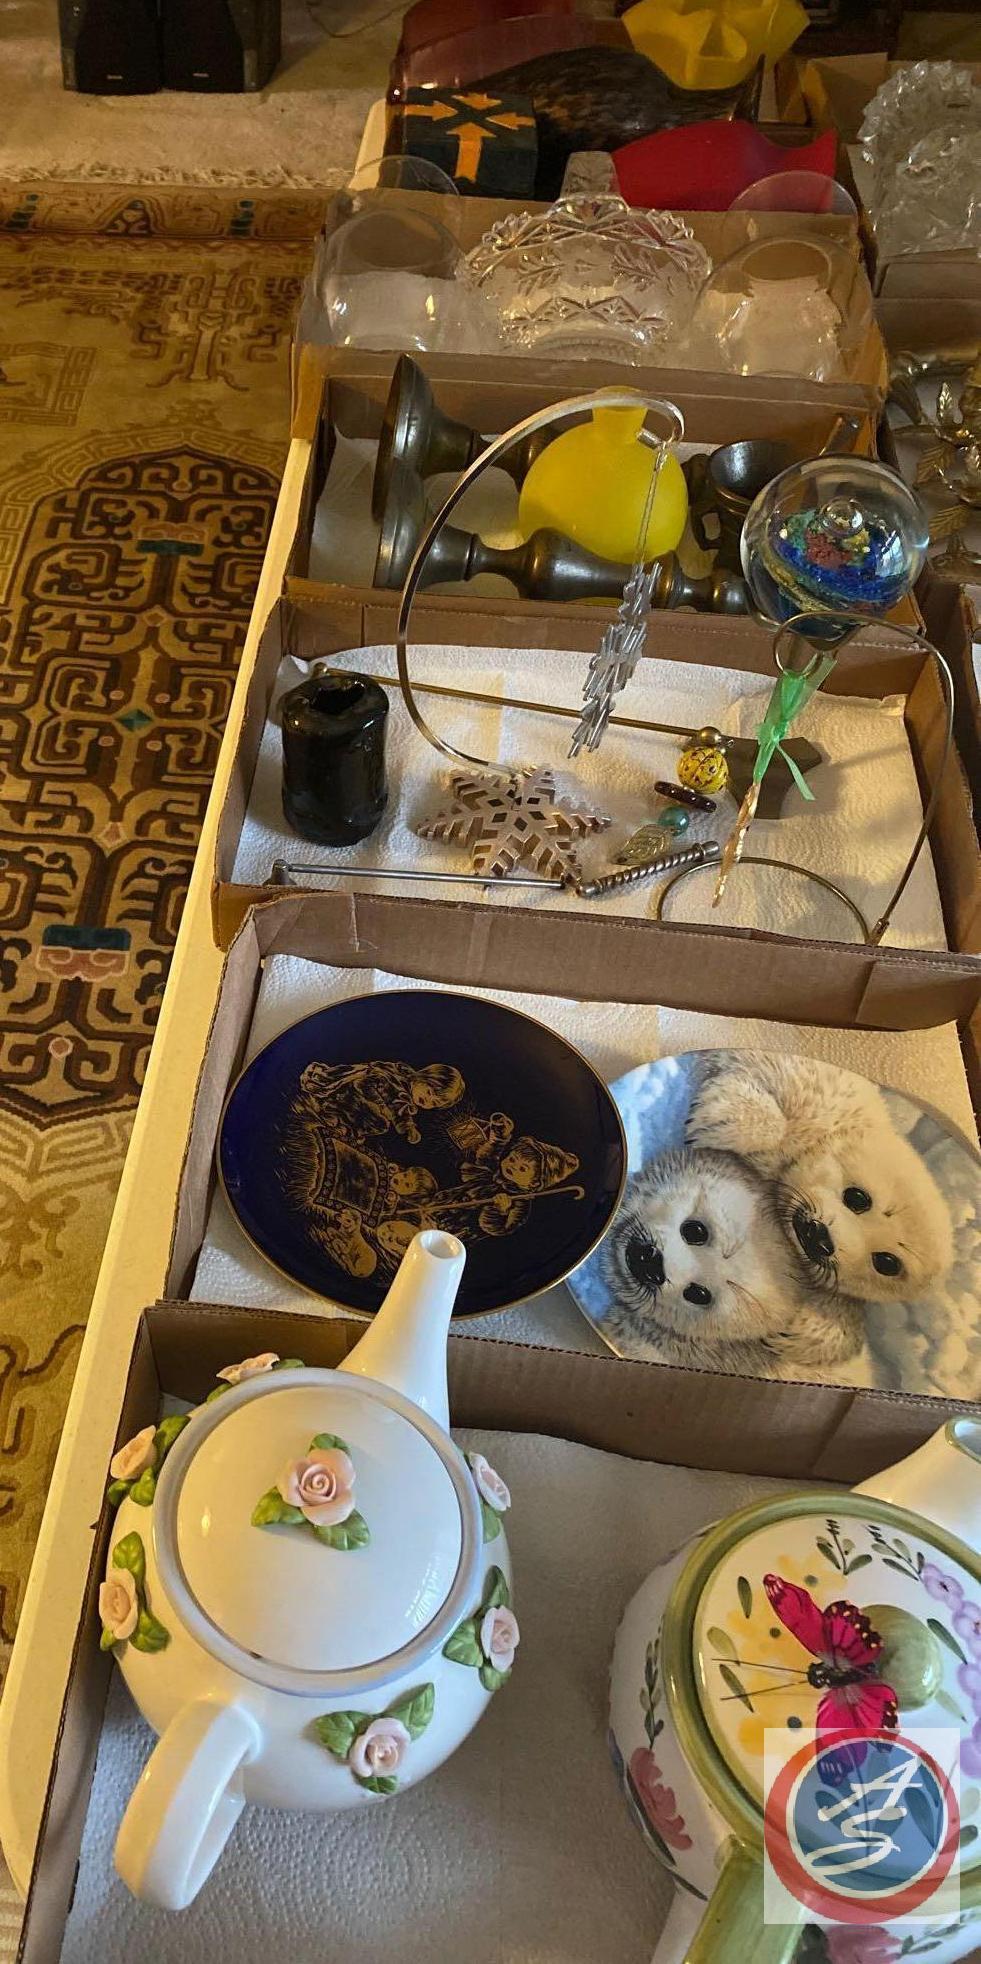 Decorative Tea Pots, Collectors Plates, Candle Stick Holders, Glass Vases, More